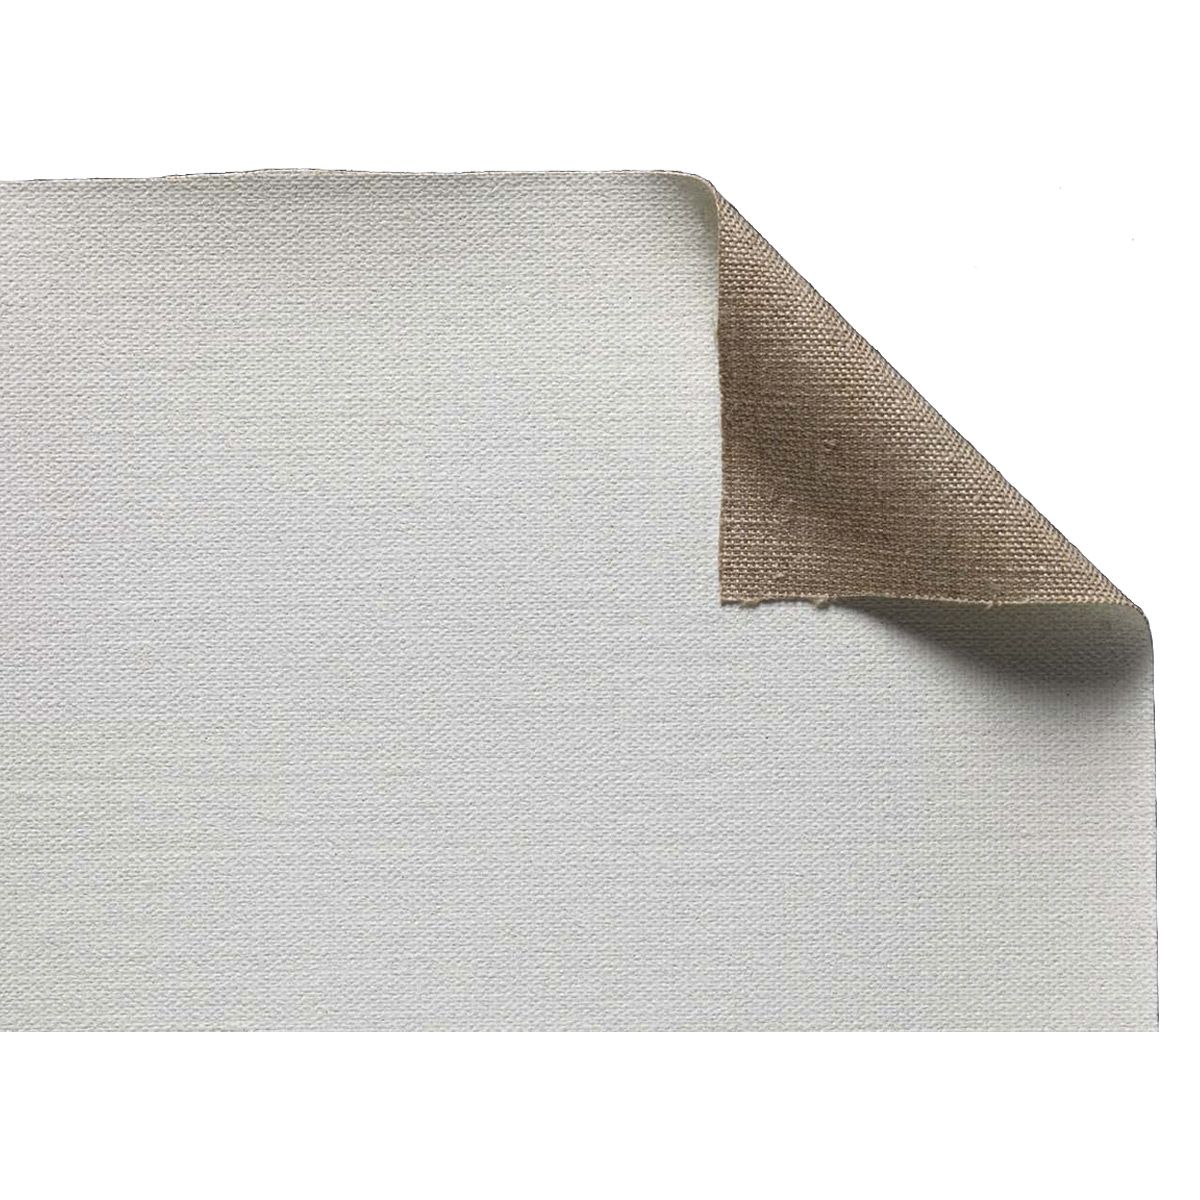 Claessens Linen #20 Single Oil Primed Heavy Texture Roll, 122" x 10.9 yd